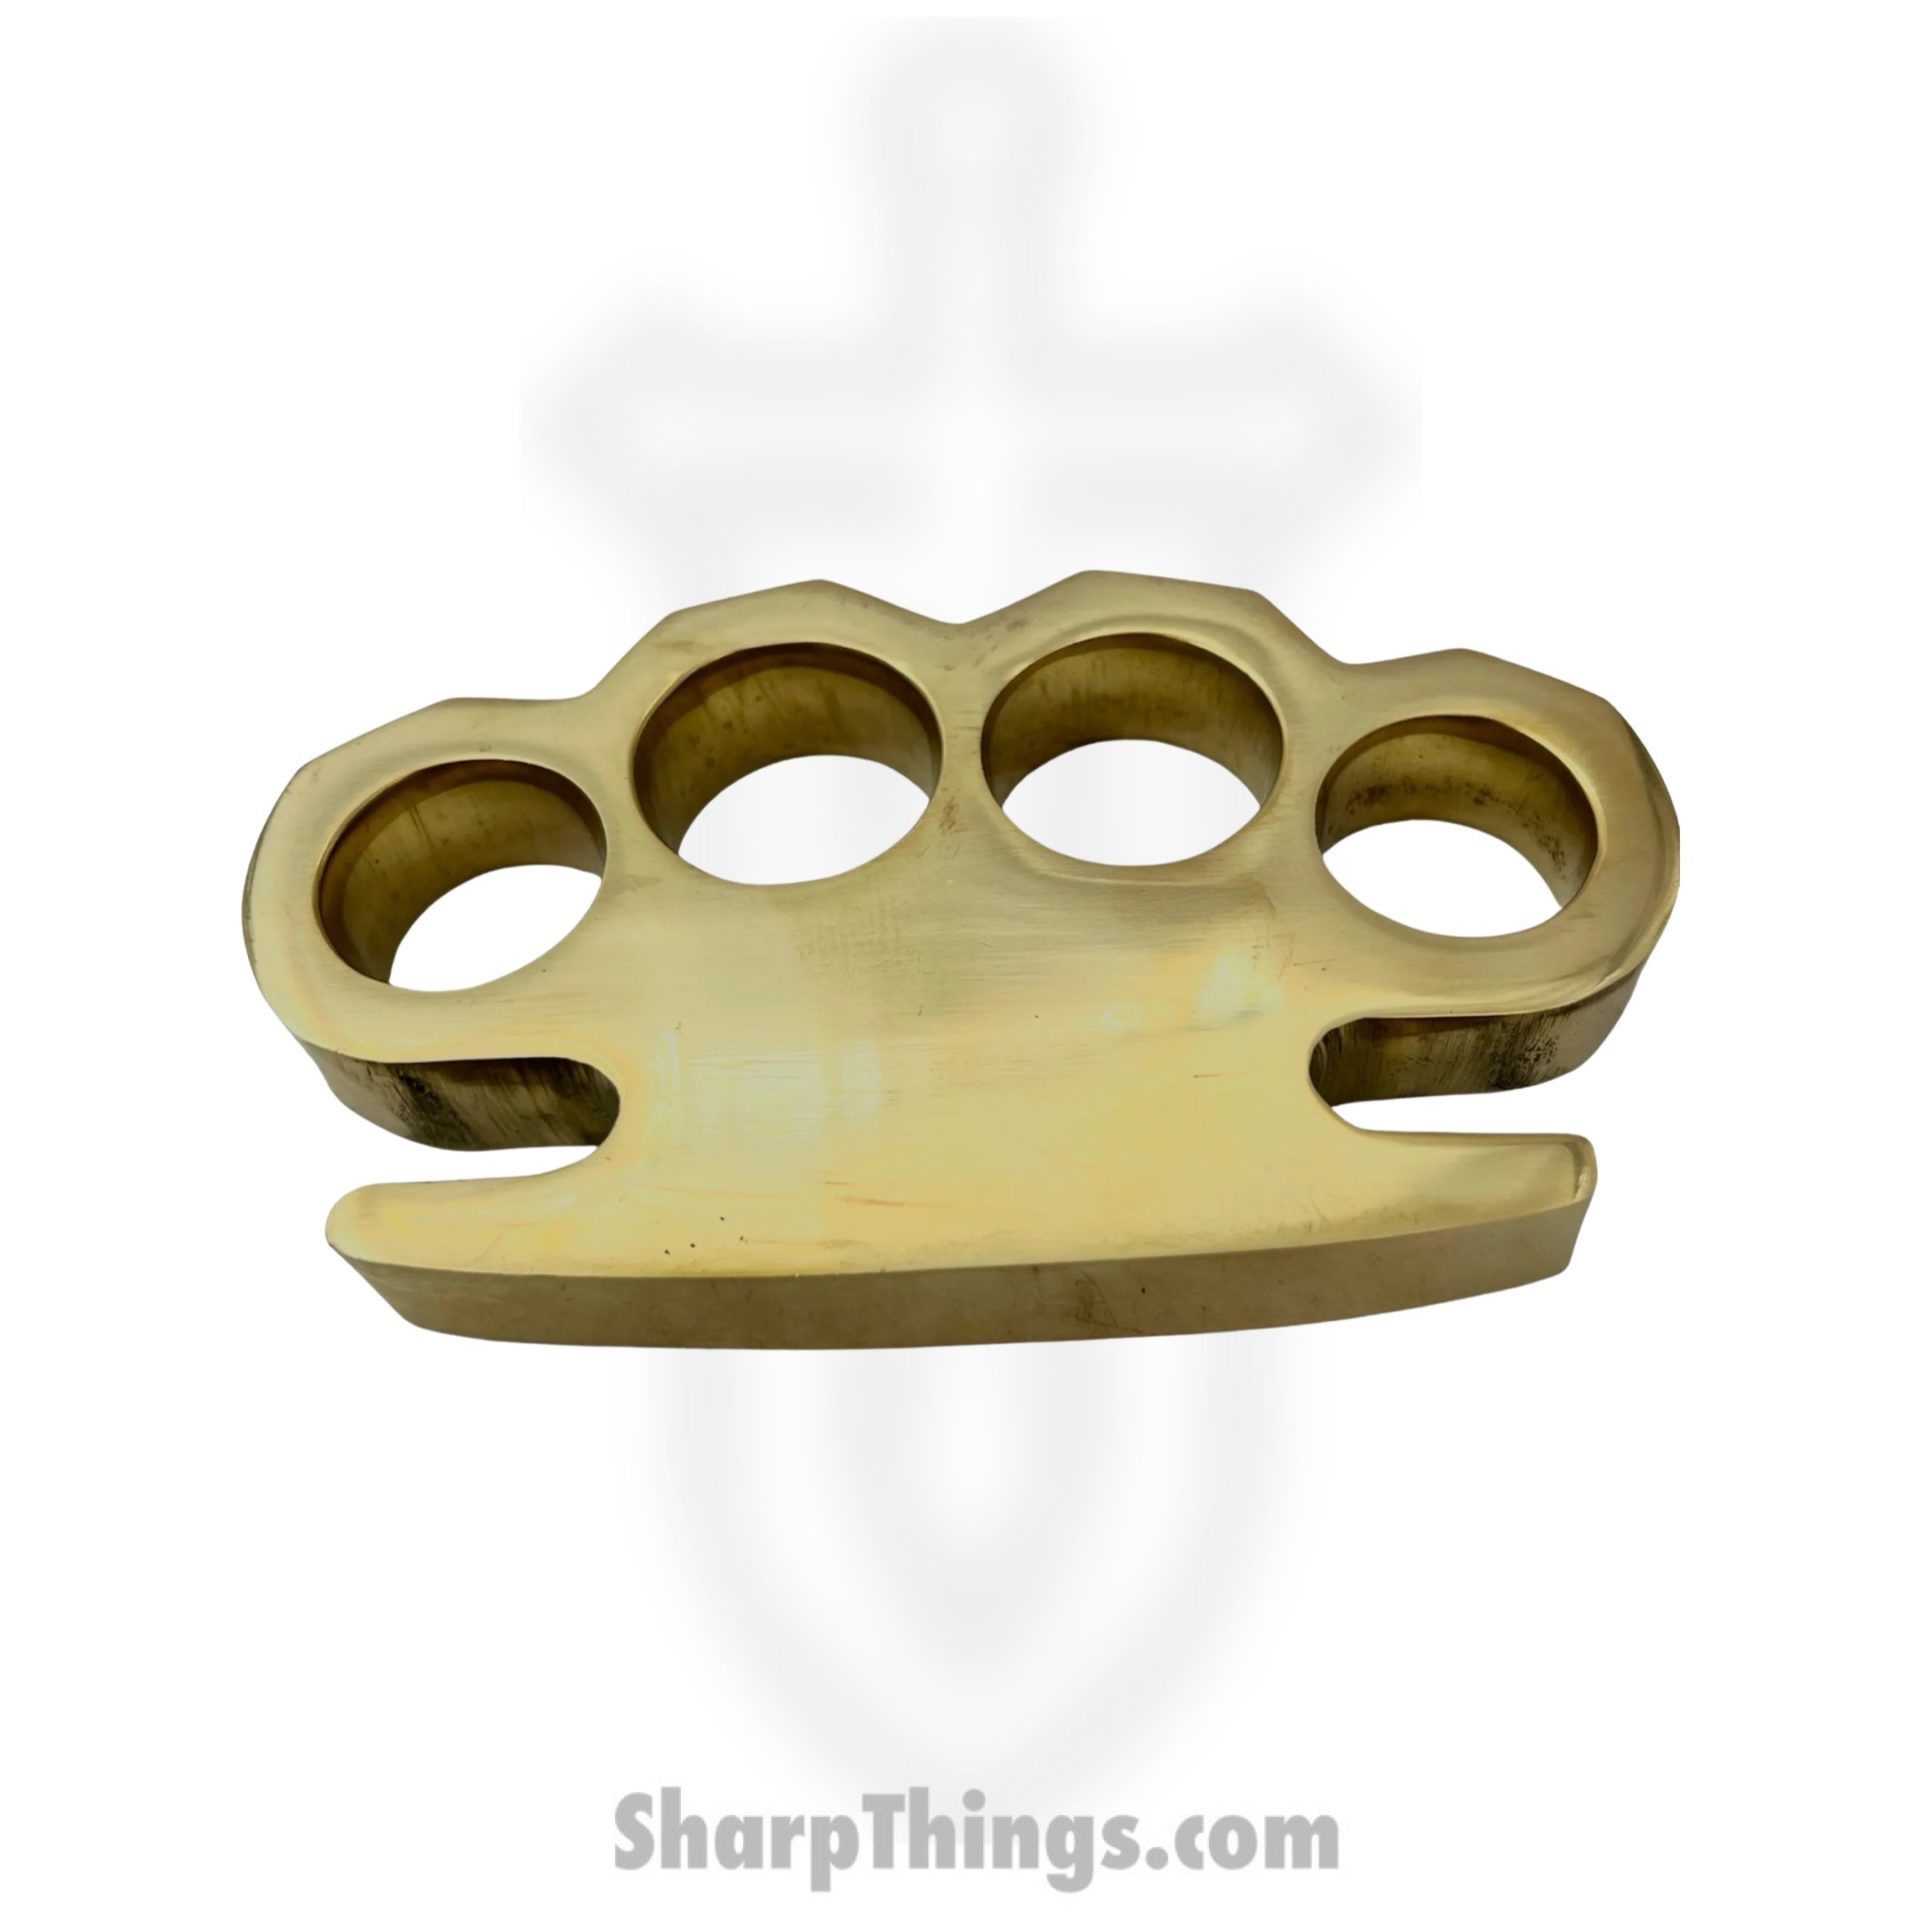 Brass Knuckles - Sharp Things OKC